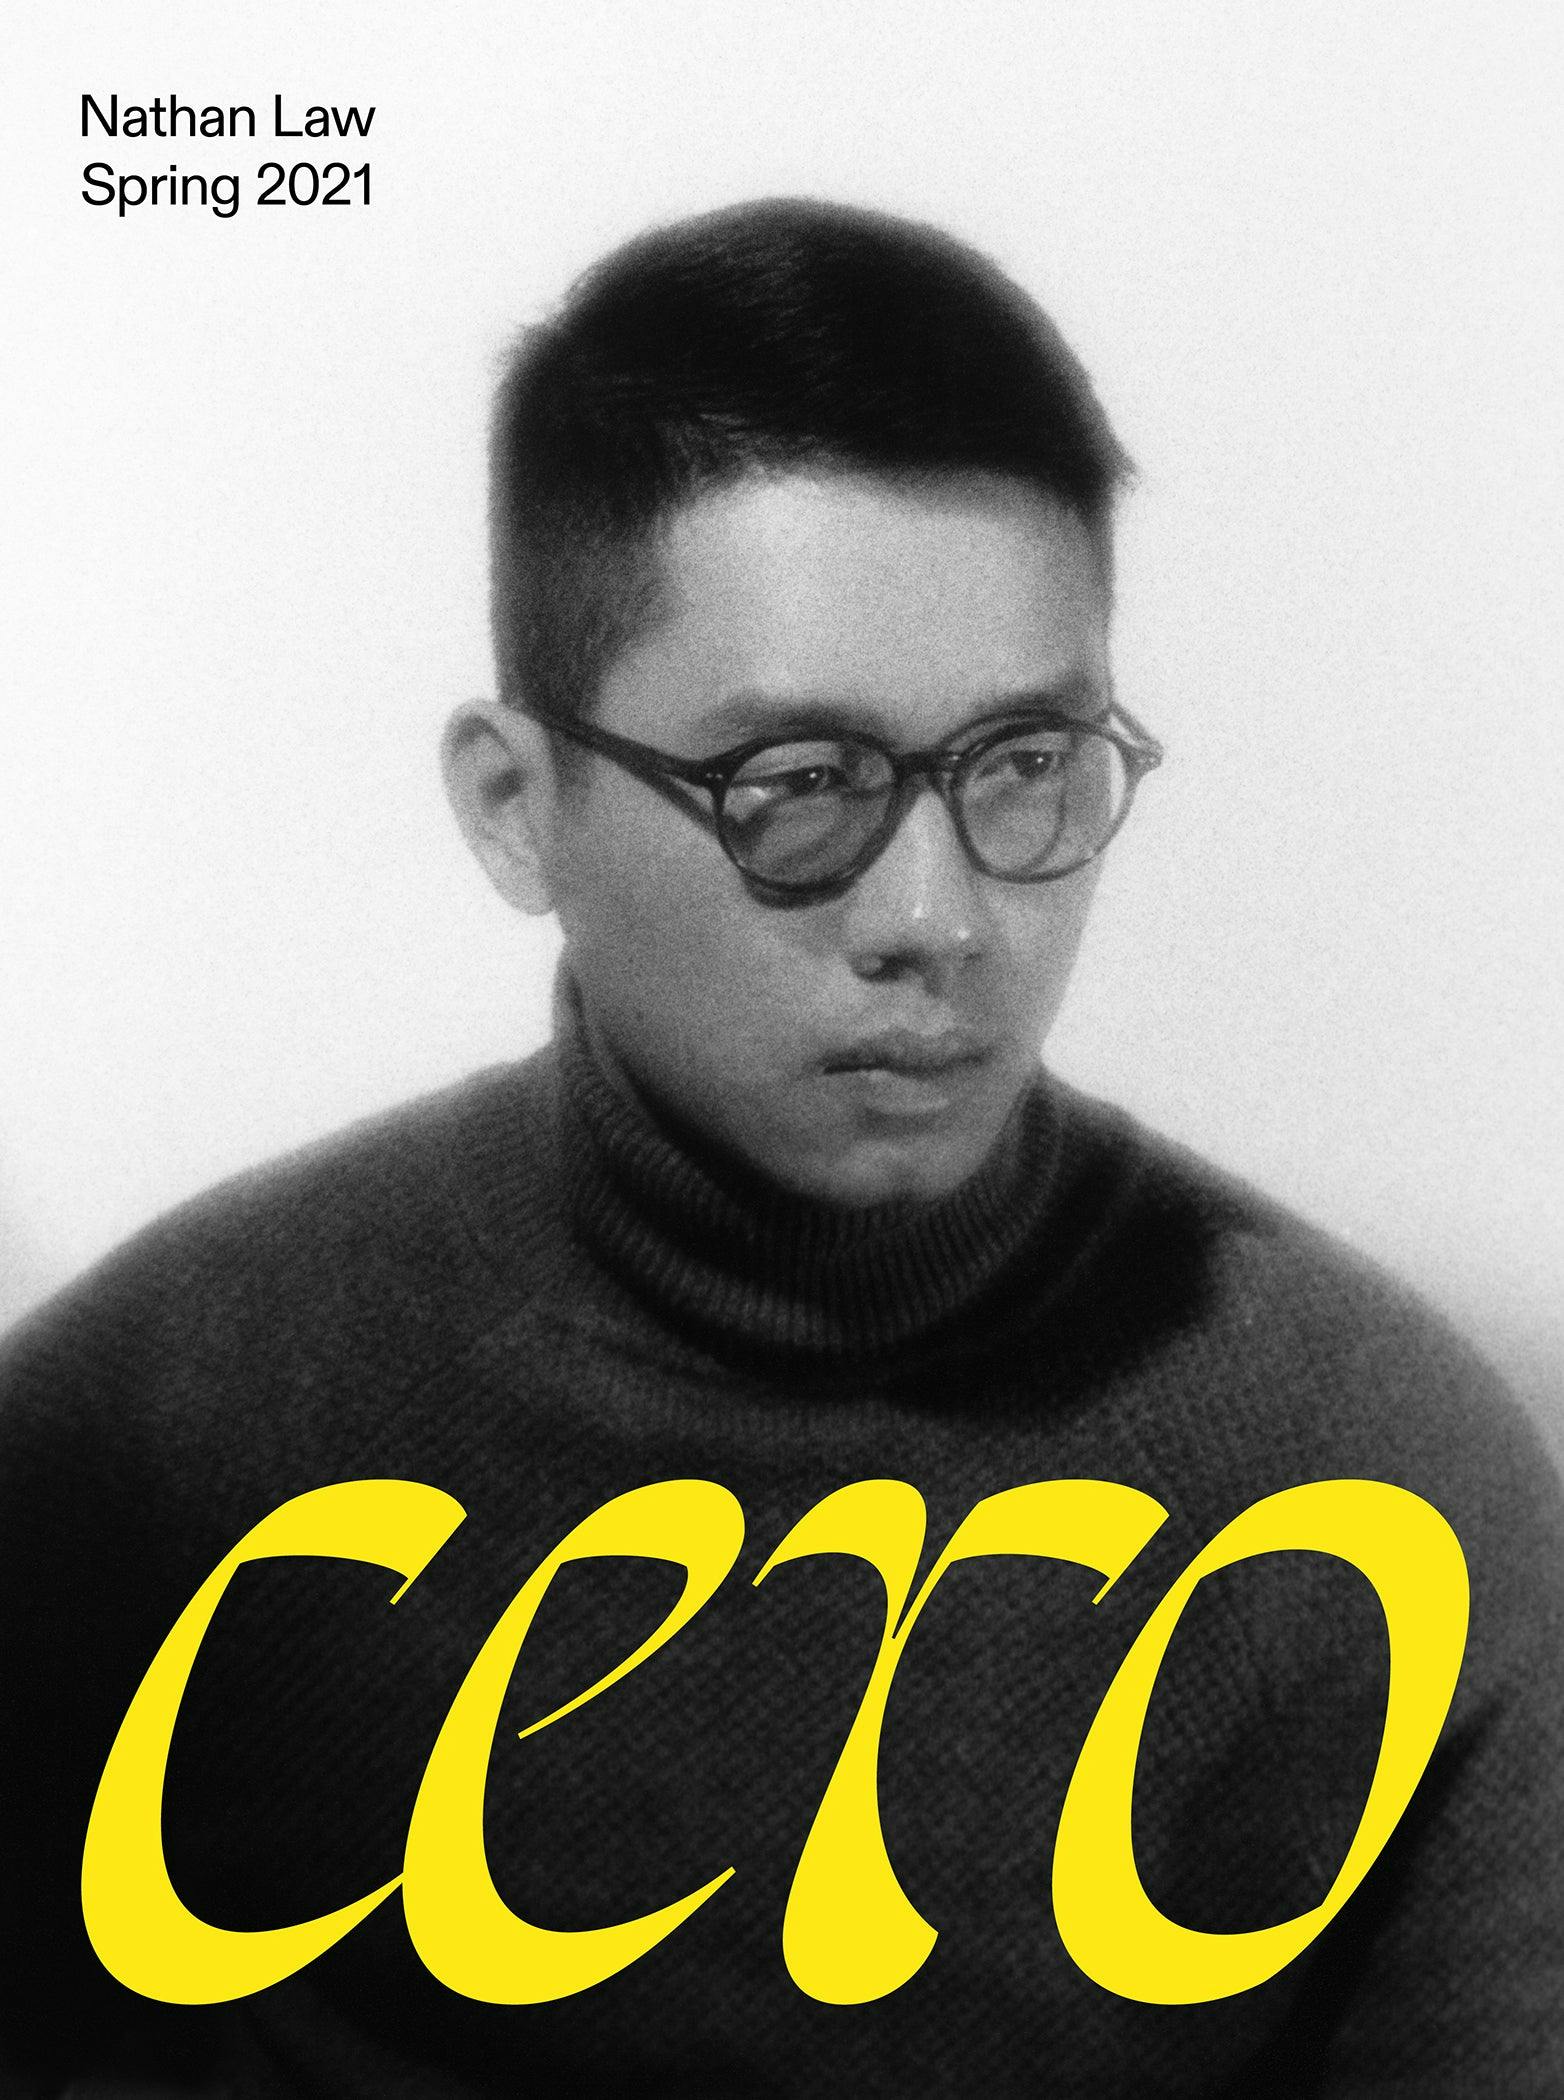 CERO01 — Nathan Law